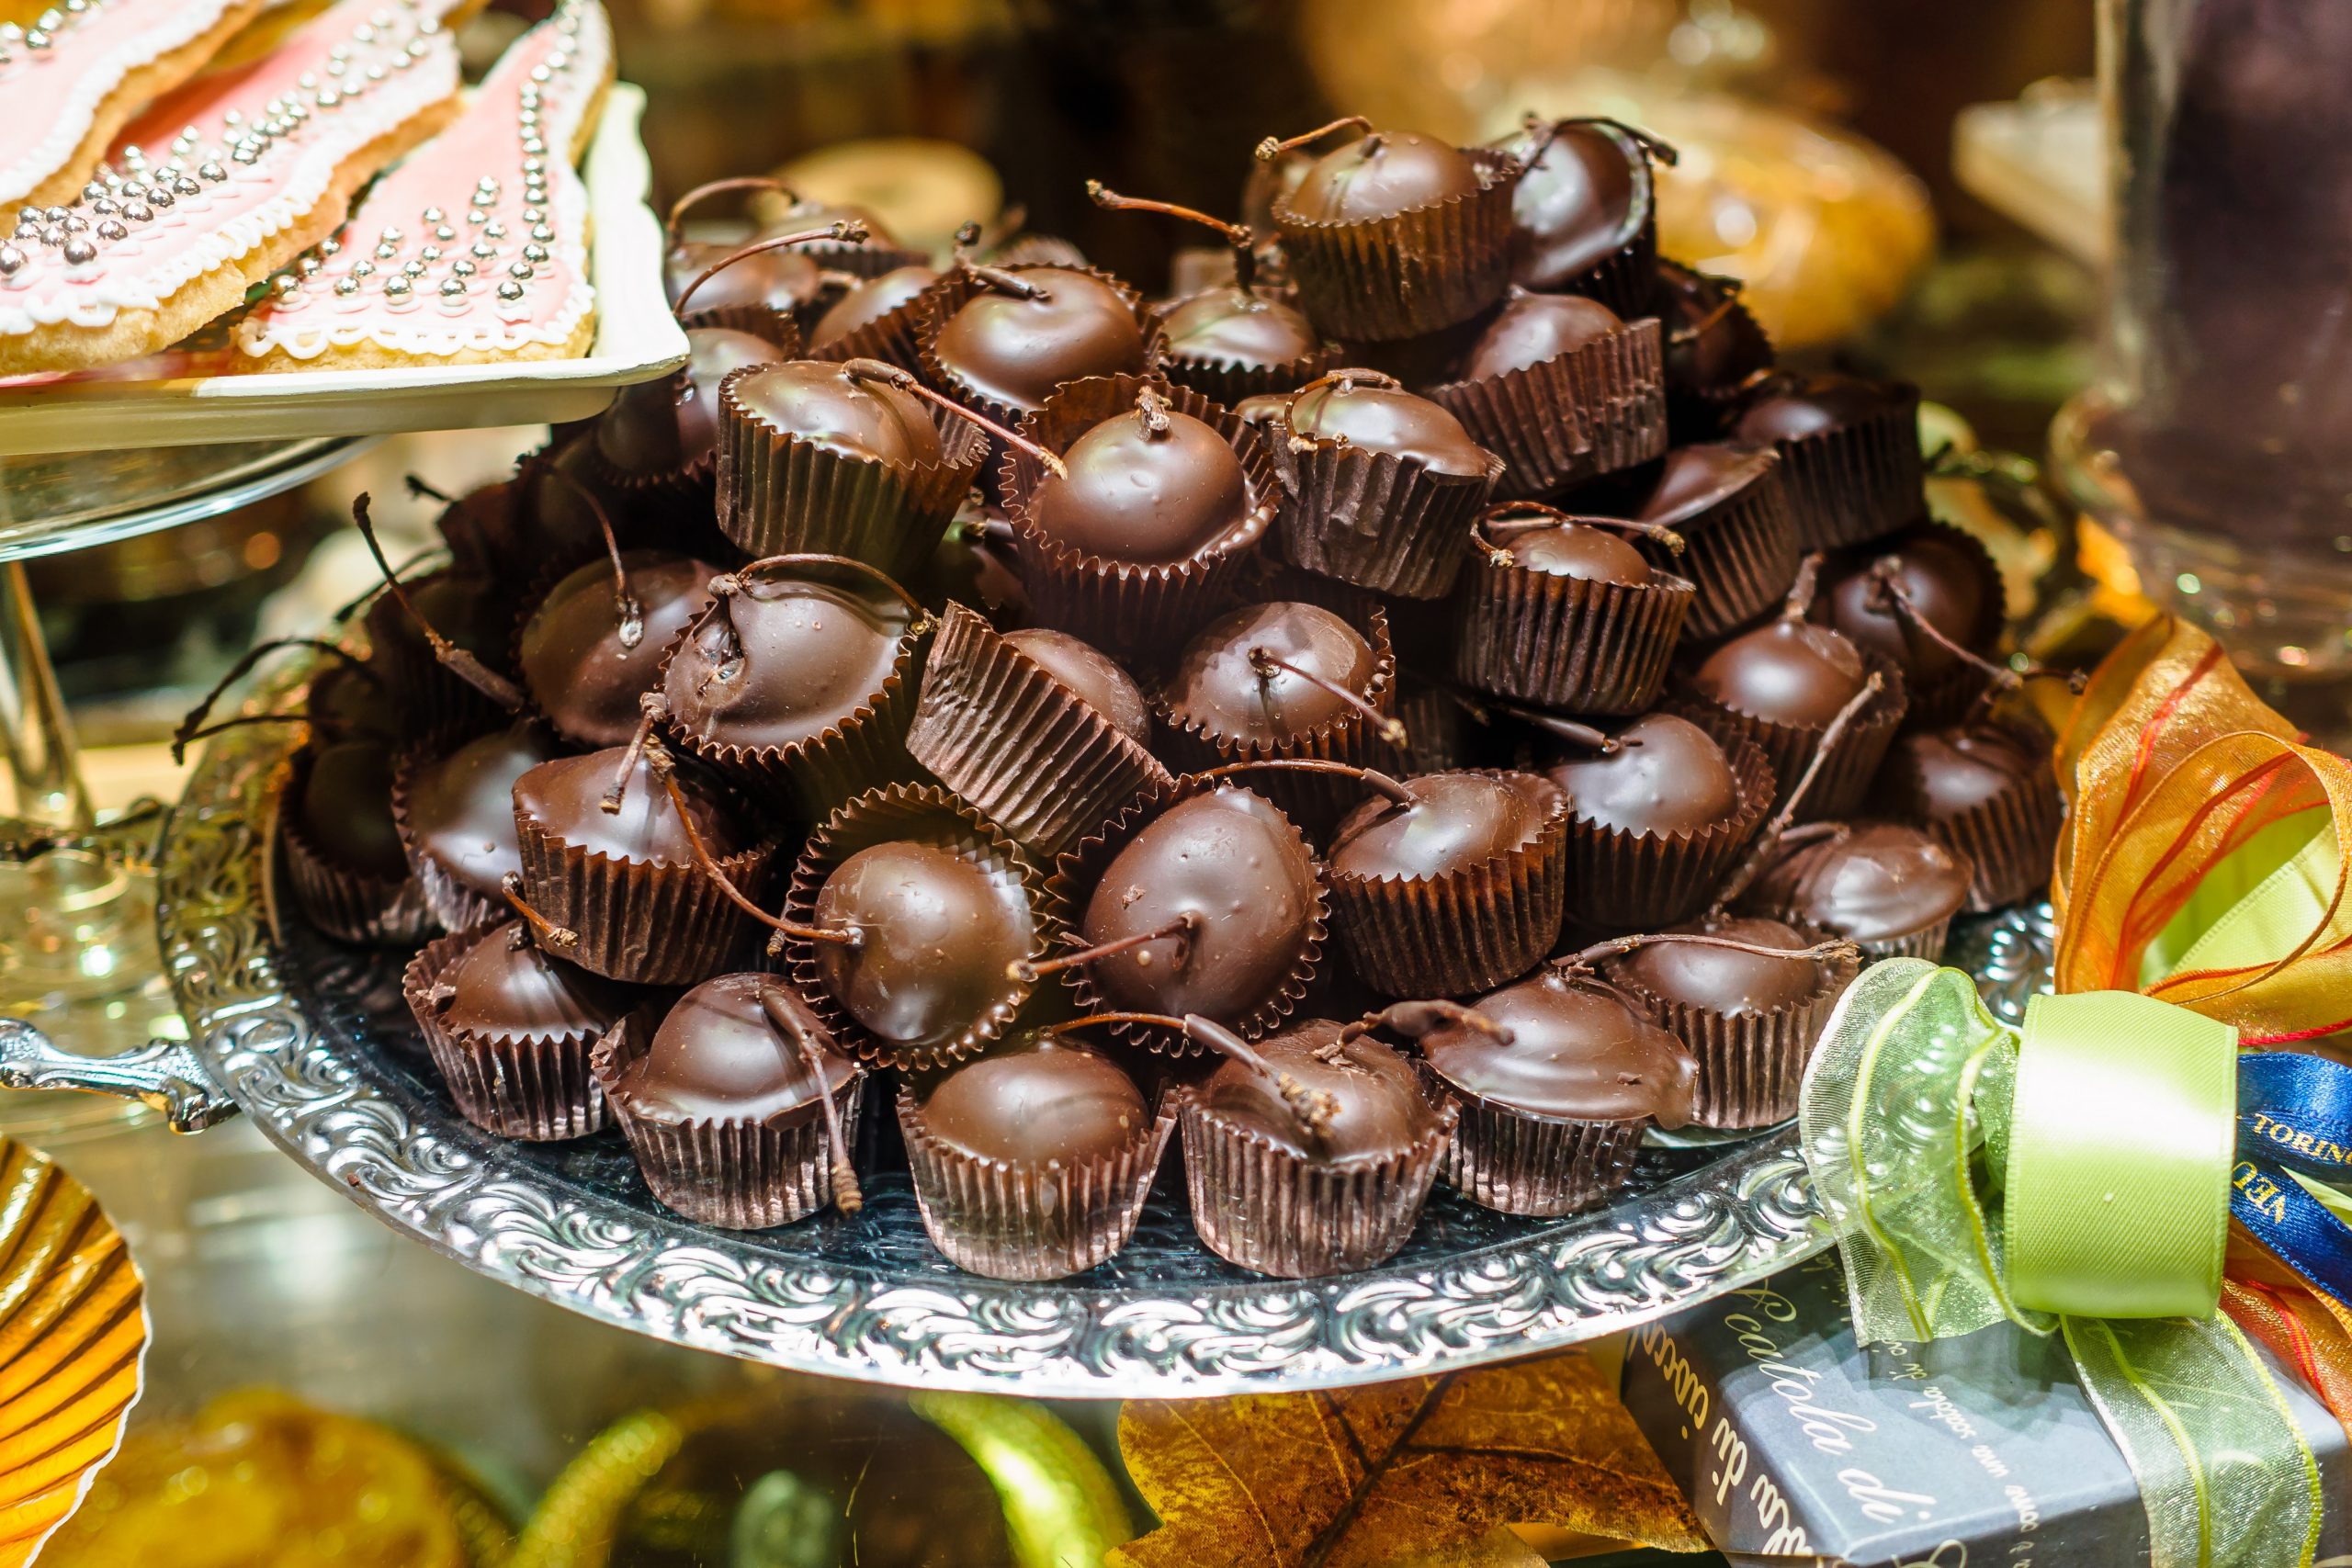 Italian chocolate from traditional Italian shops